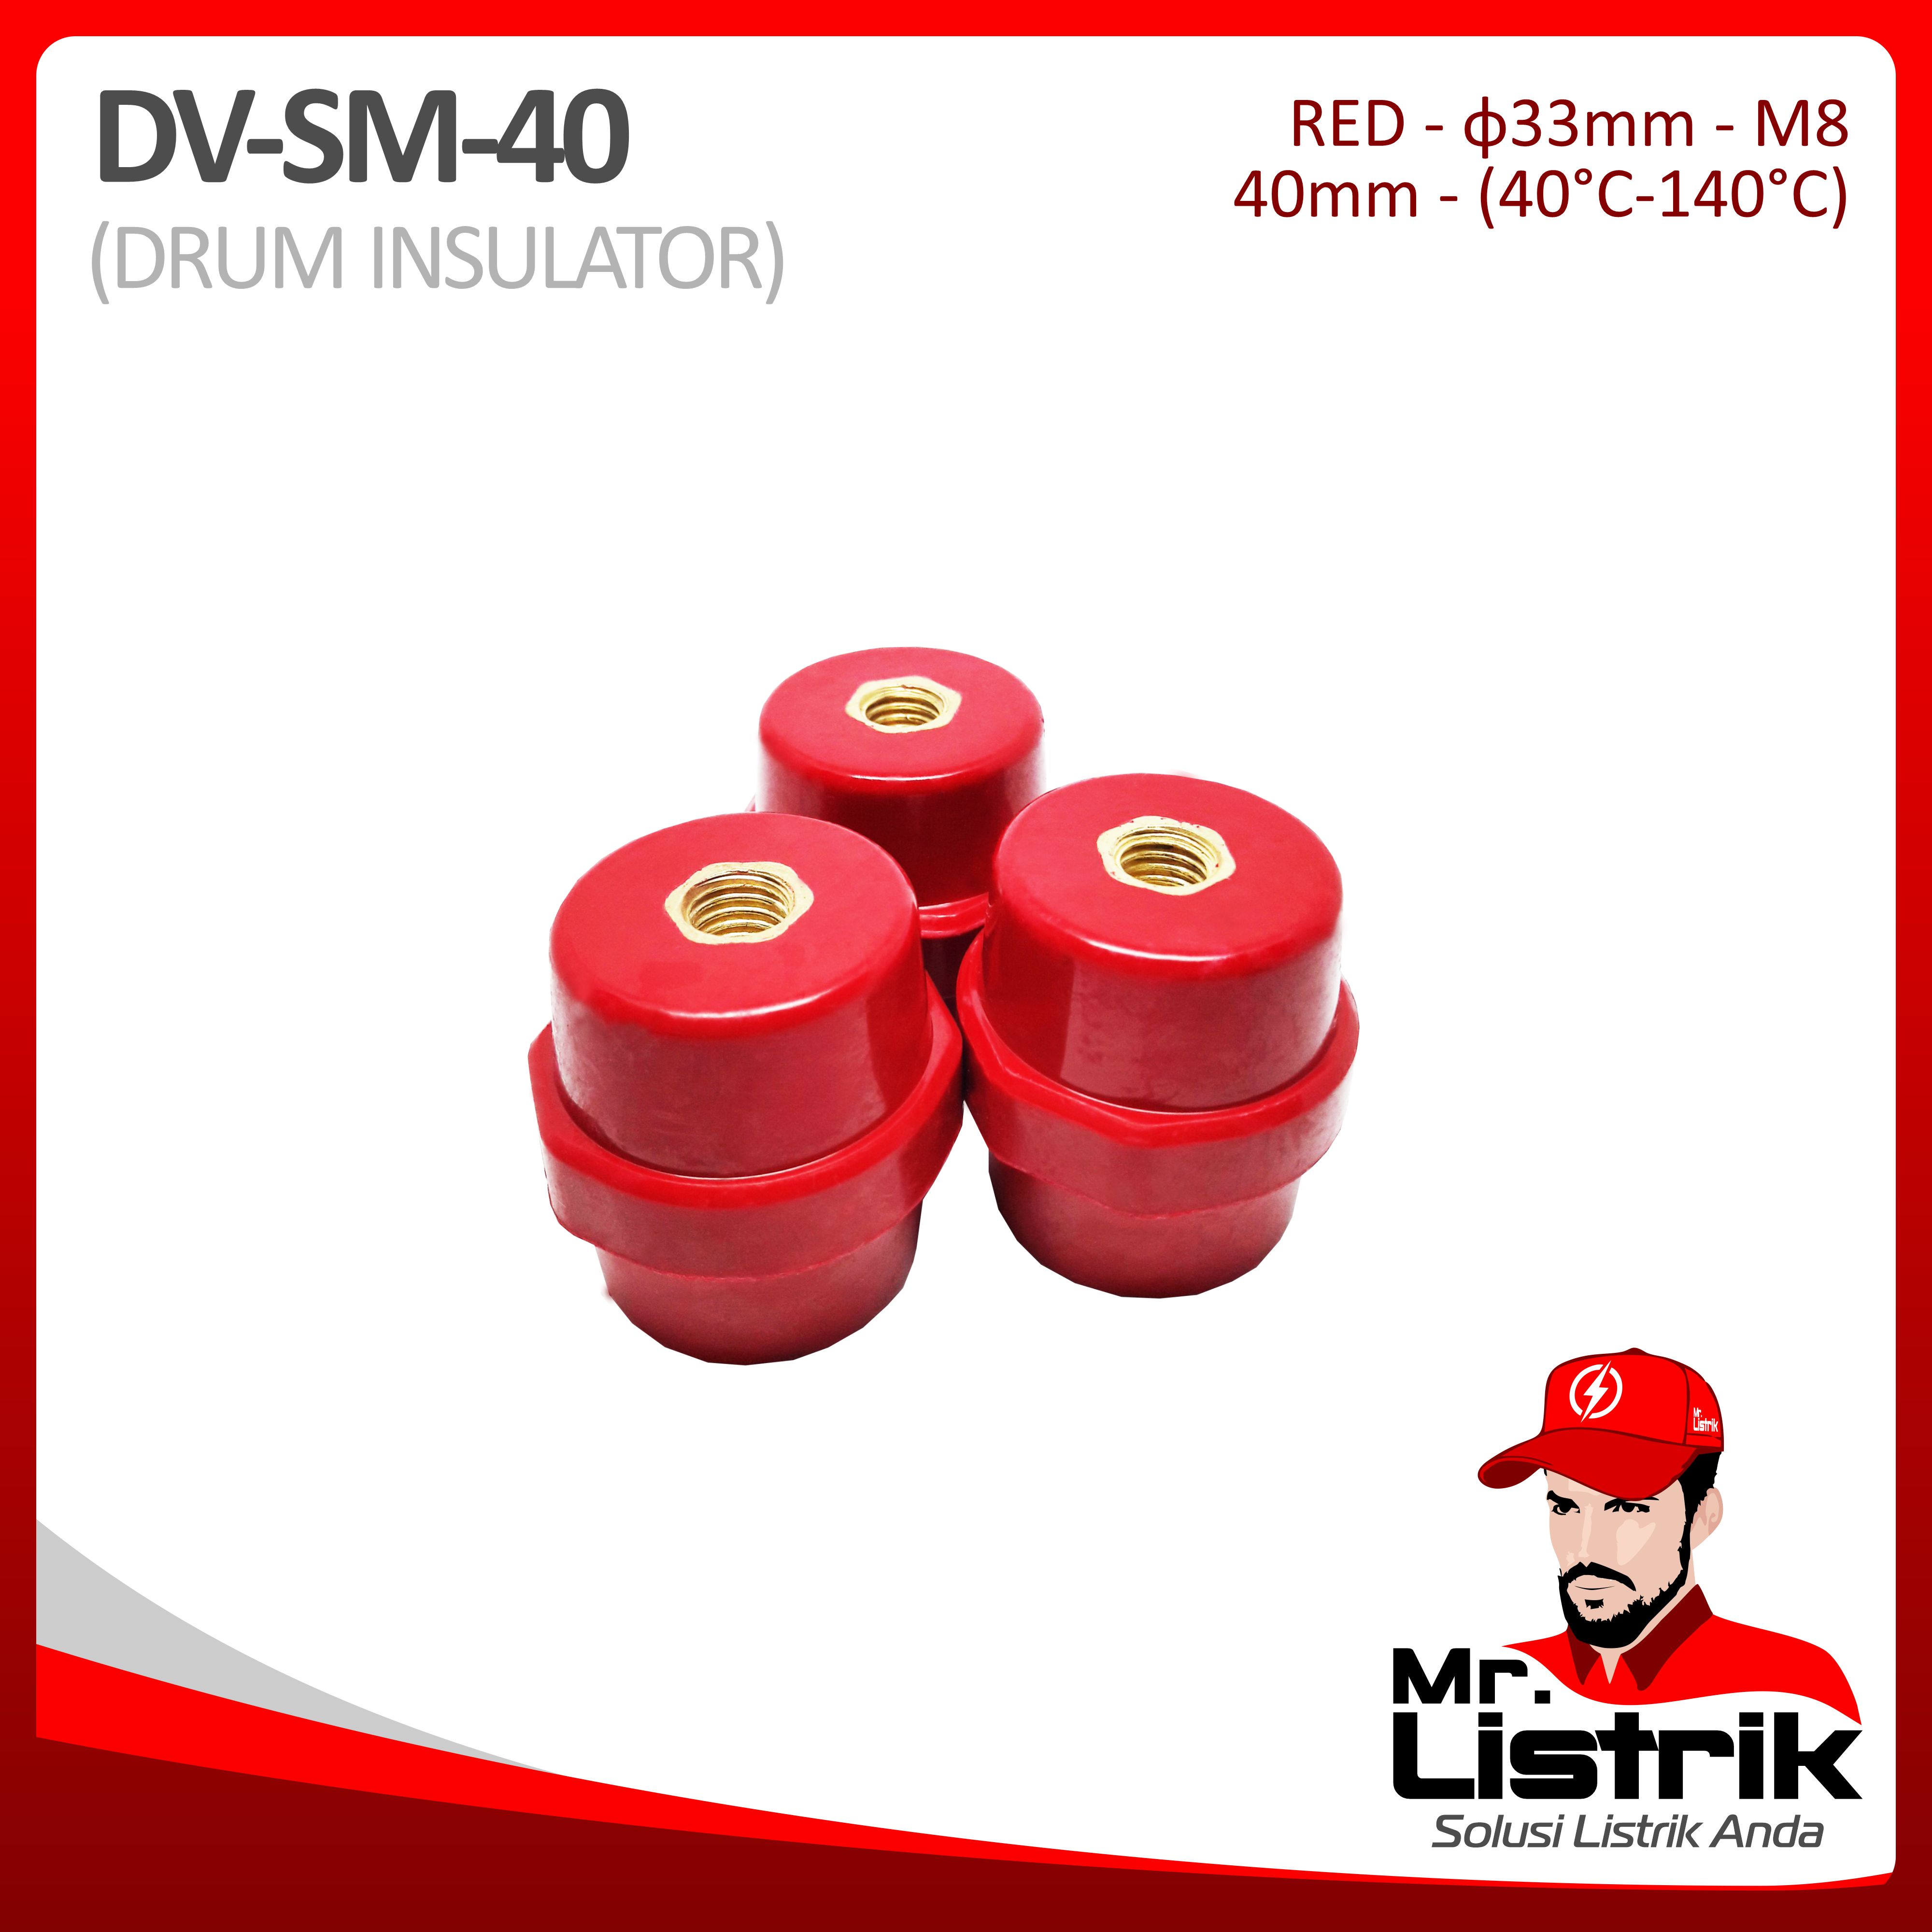 Drum Insulator Rekolit DV SM-40